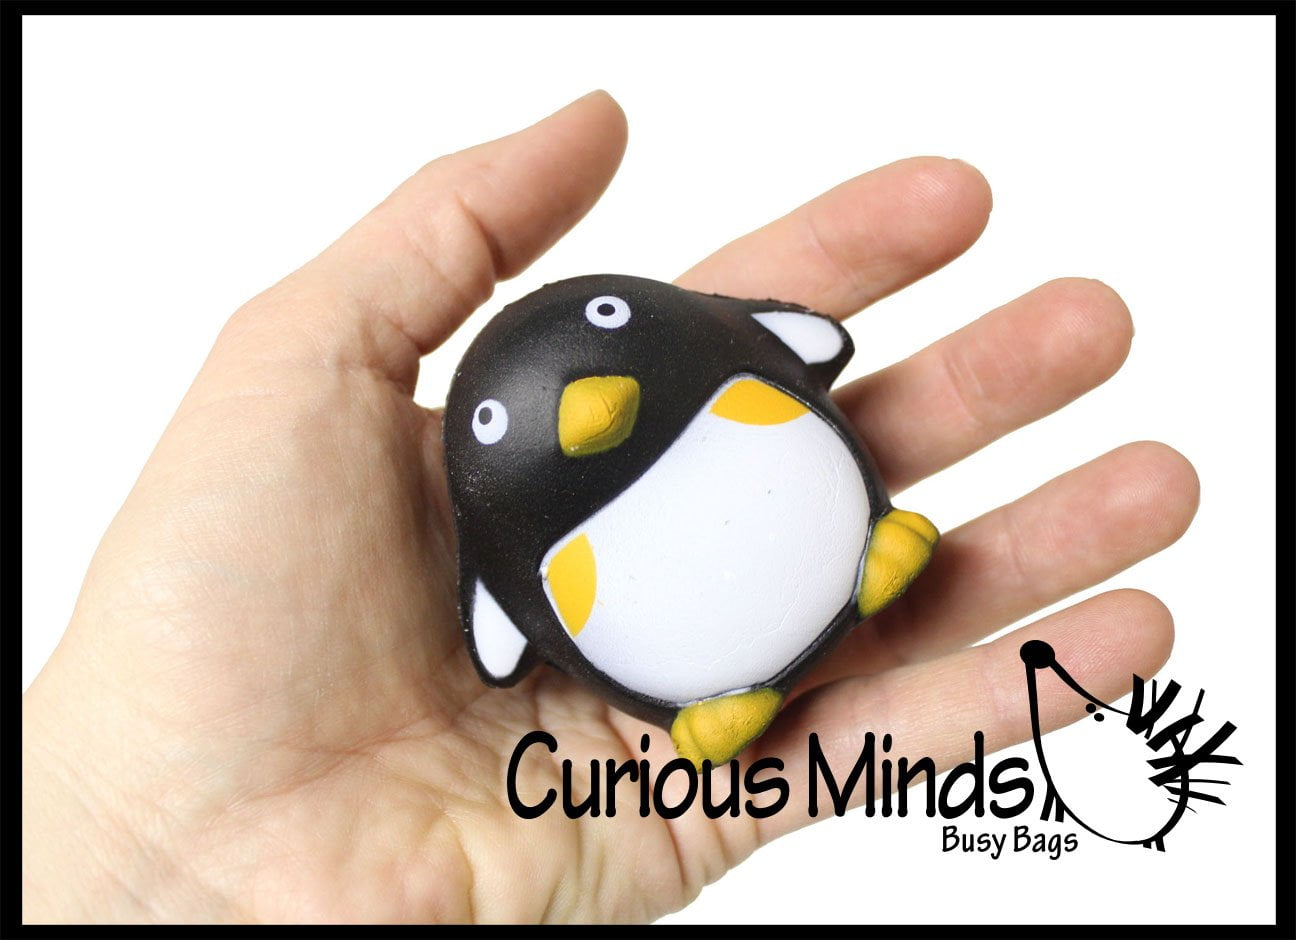 How to make adorable penguin figurines - SPUNNYS DIY